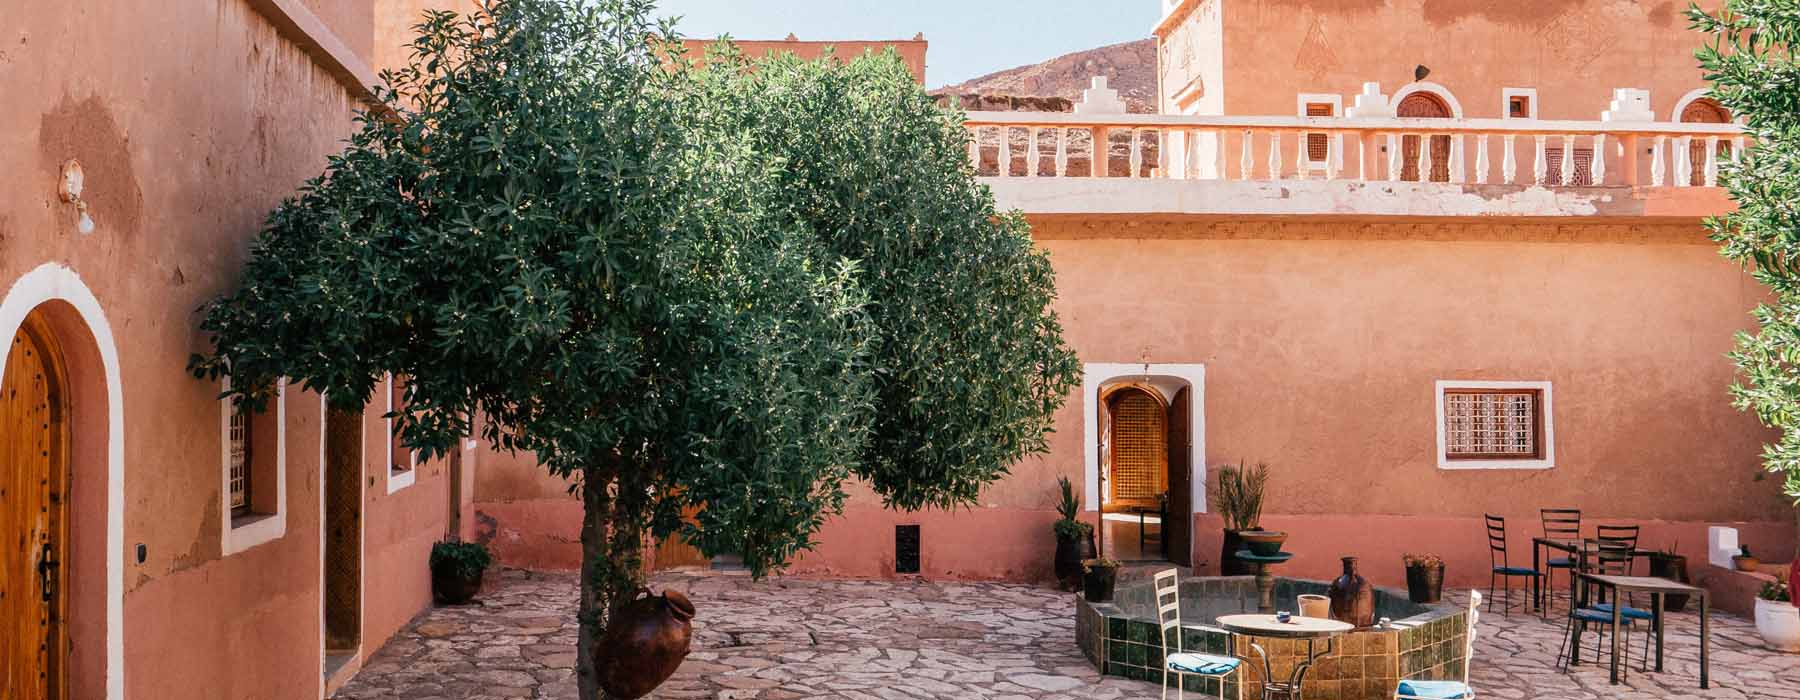 Morocco<br class="hidden-md hidden-lg" /> Luxury Adventure Holidays